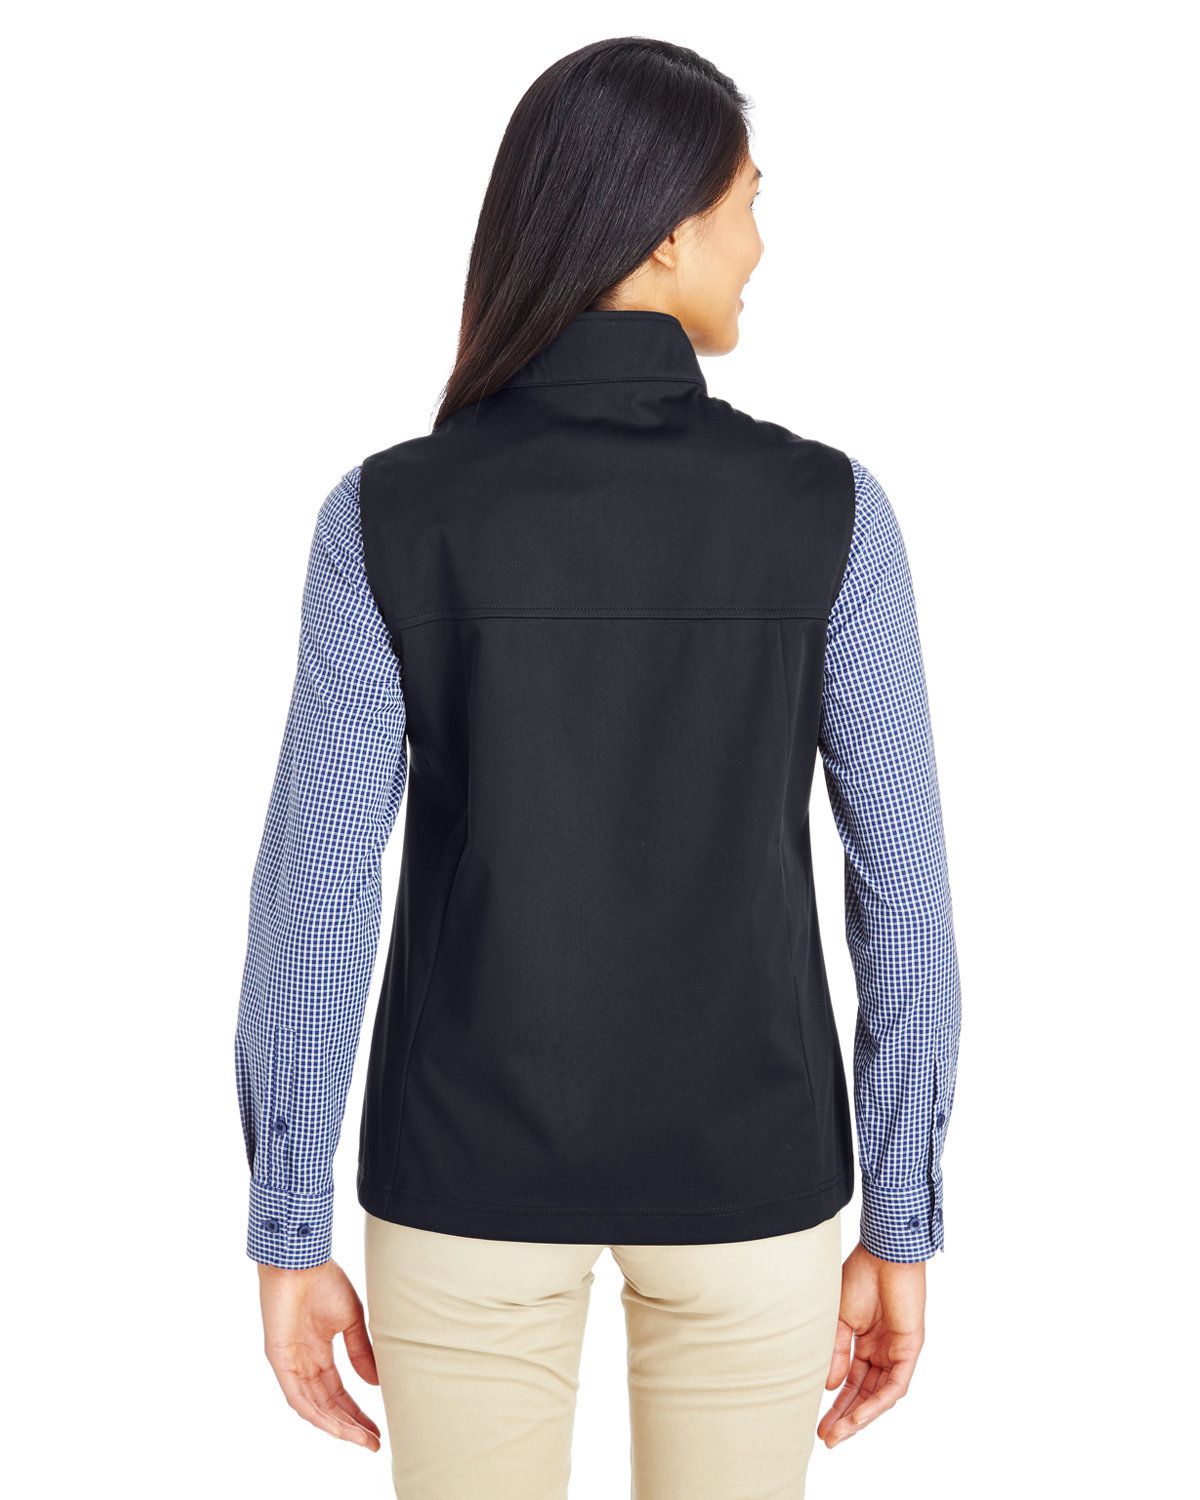 'Core365 CE709W Women's Techno Lite Three Layer Knit Tech Shell Quarter Zip Vest'